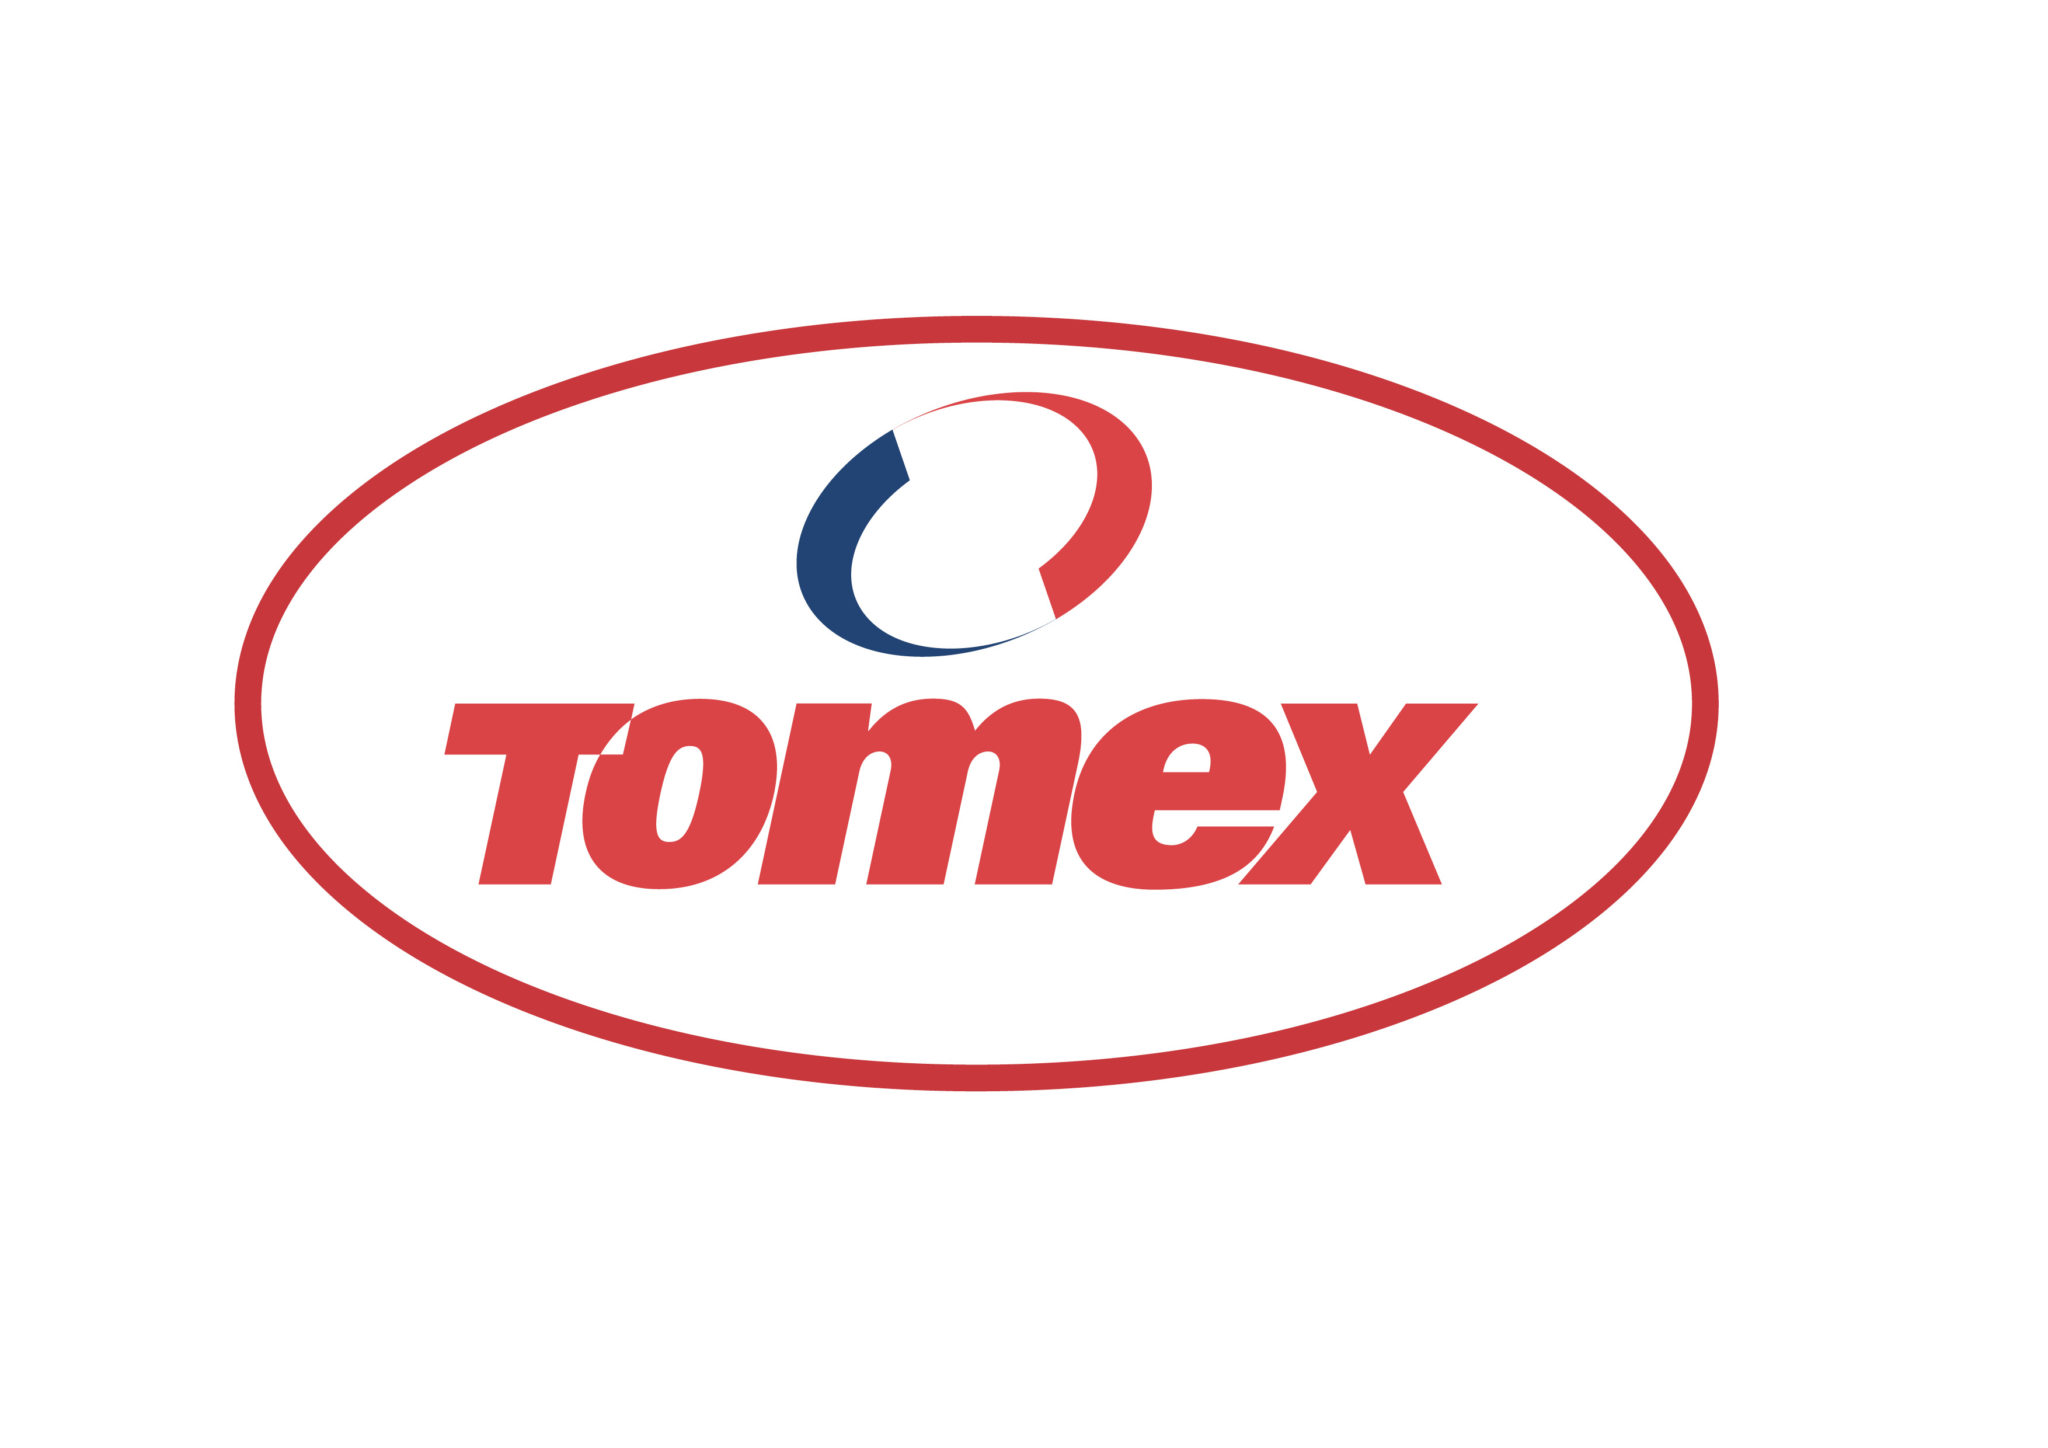 Tomex logo clean